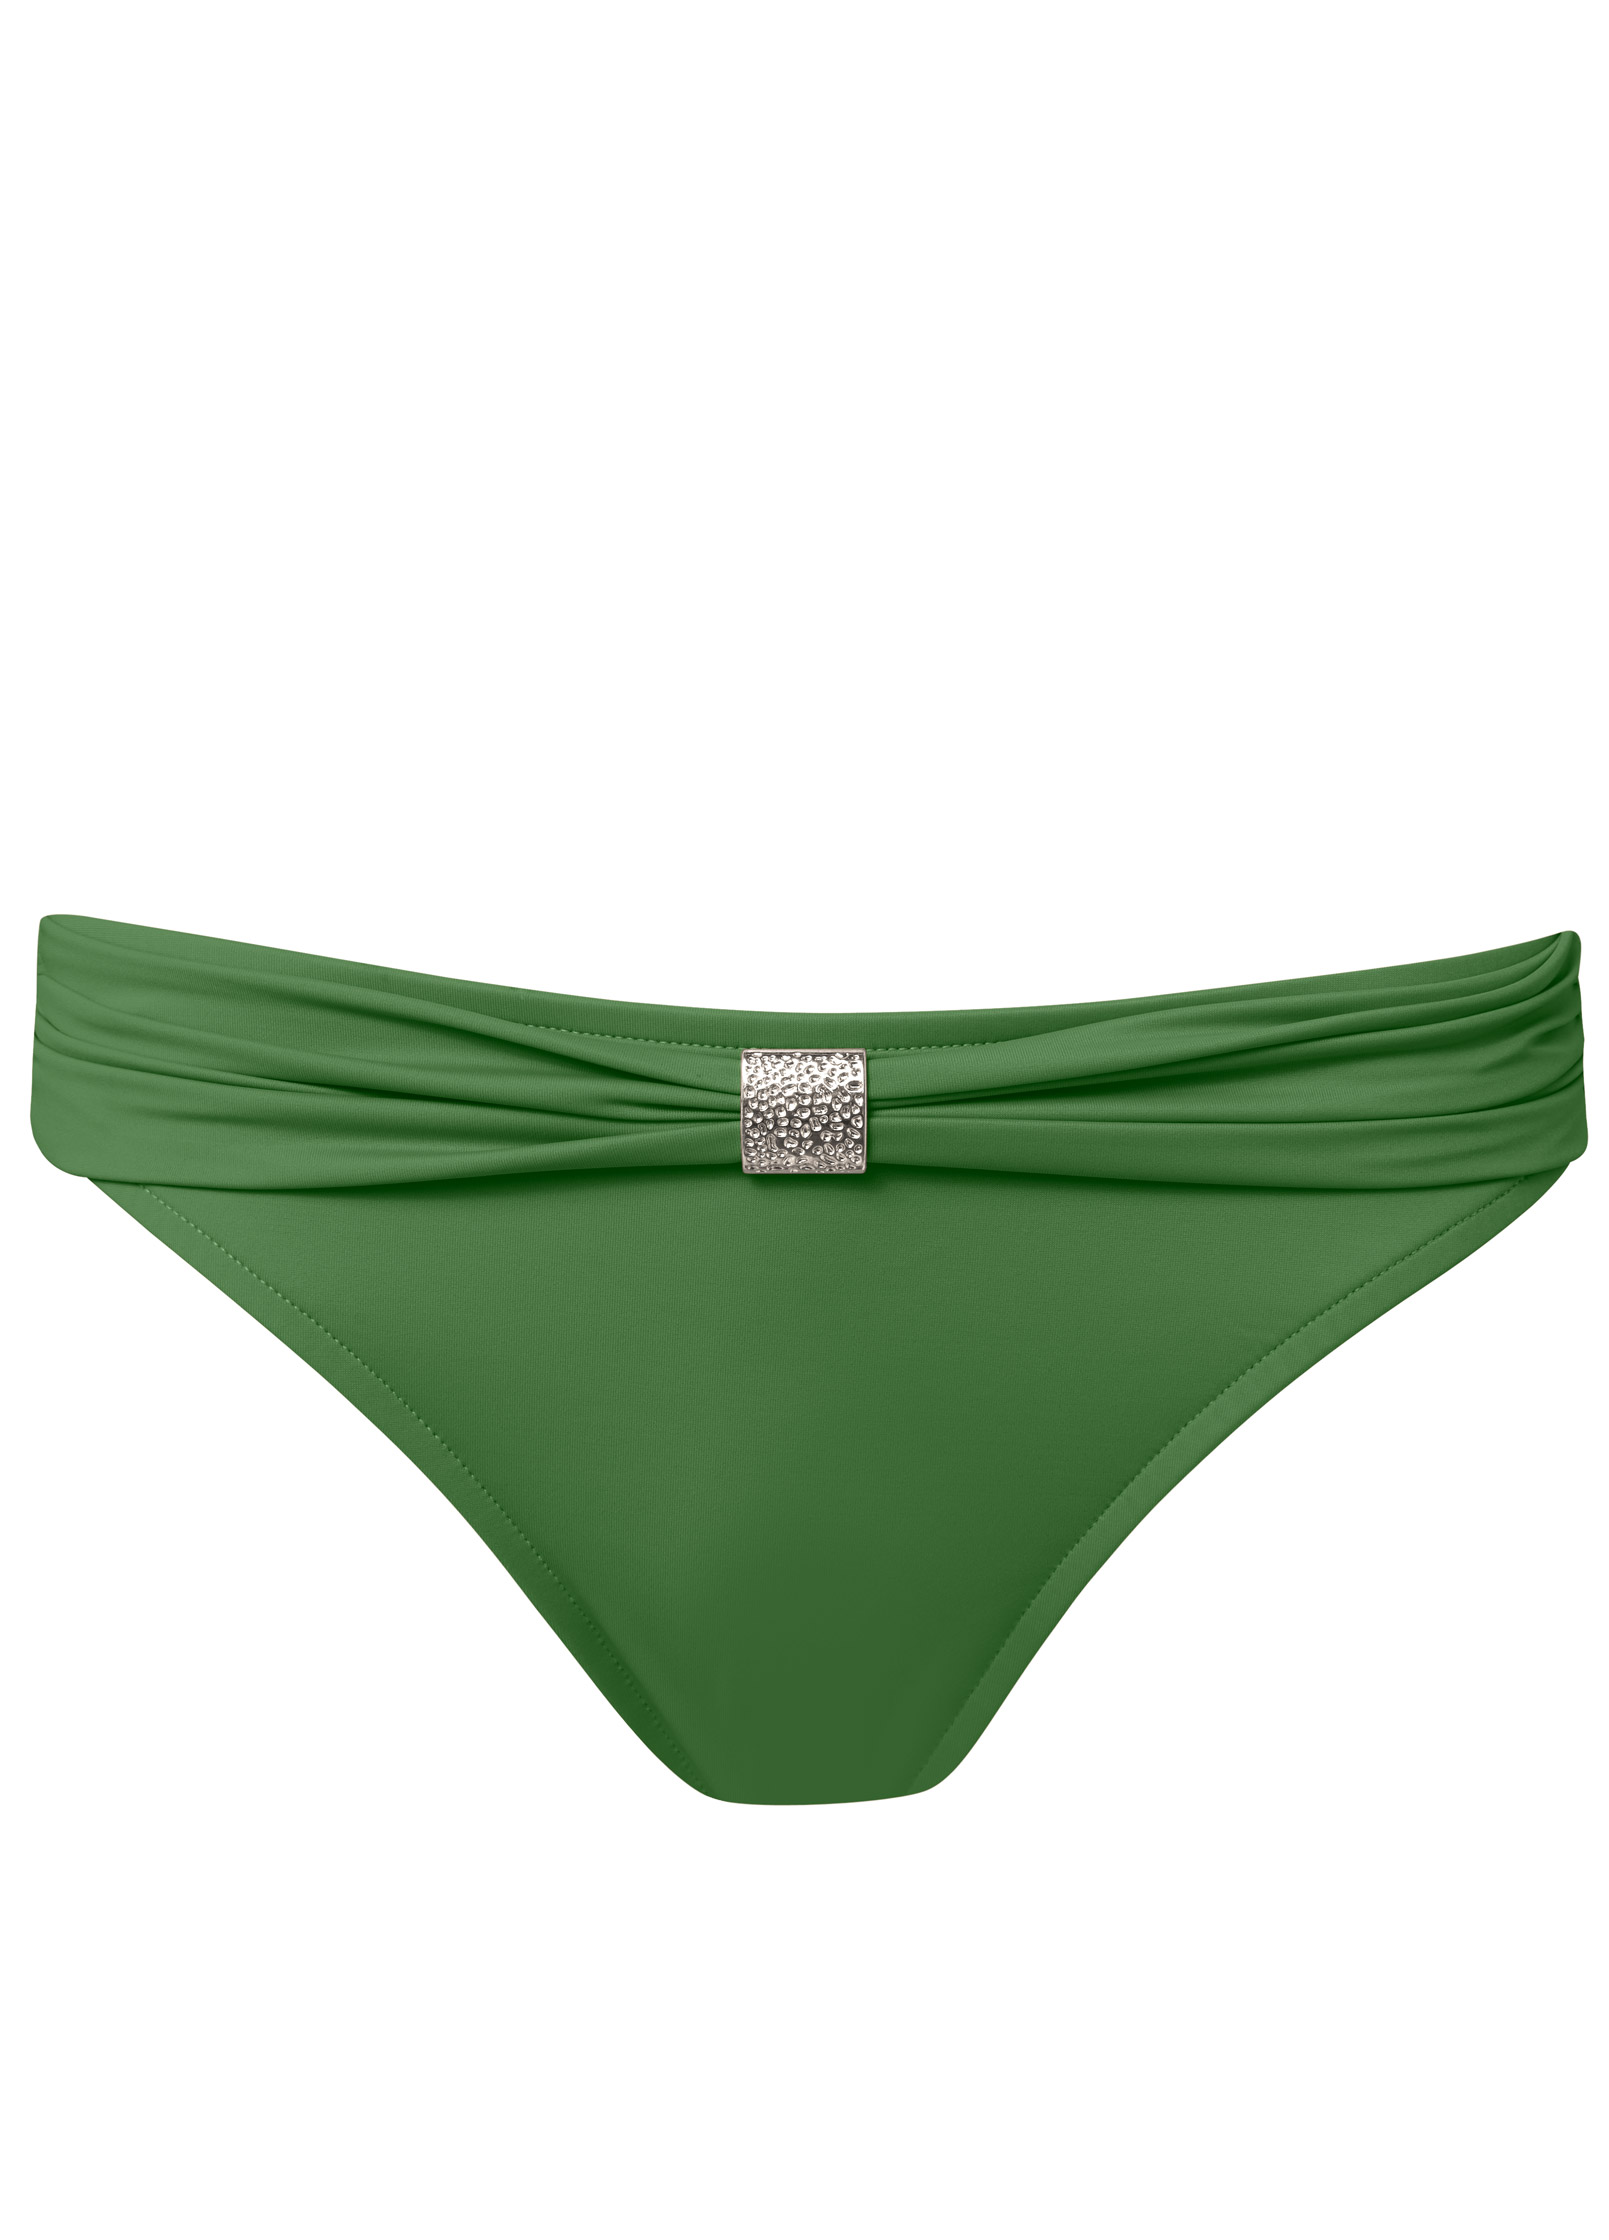 If You Say So Bandeau Bikini - Everglades Green | VENUS